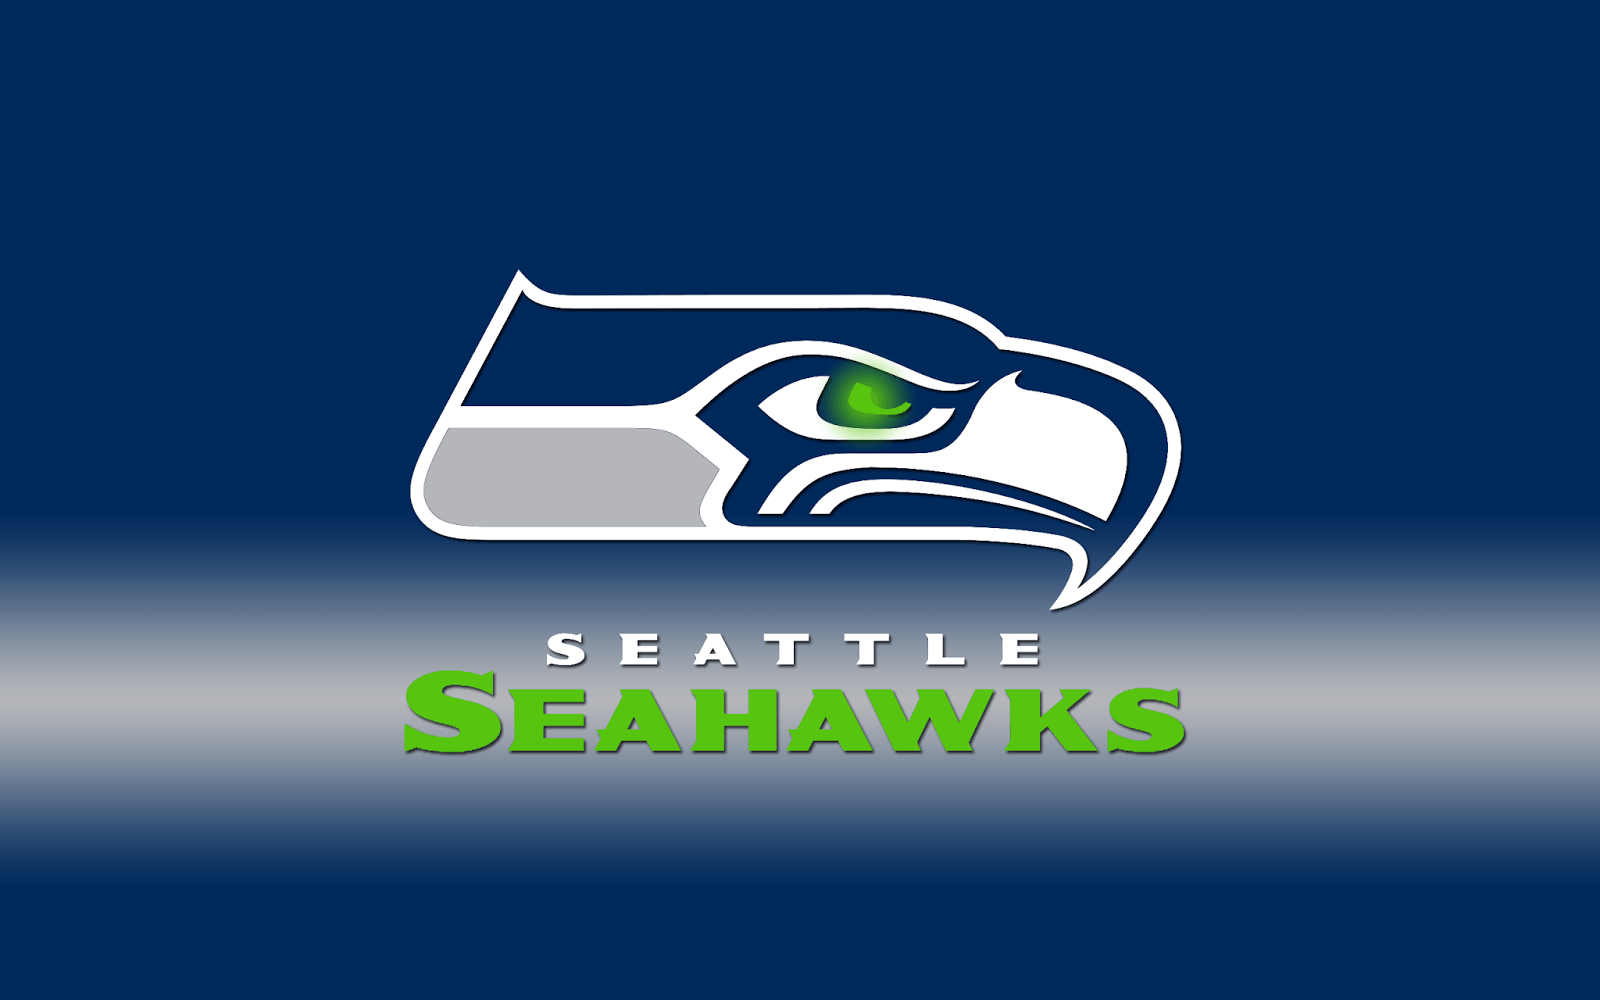 Seattle Seahawks Wallpaper Background 55974 4904x3324 px